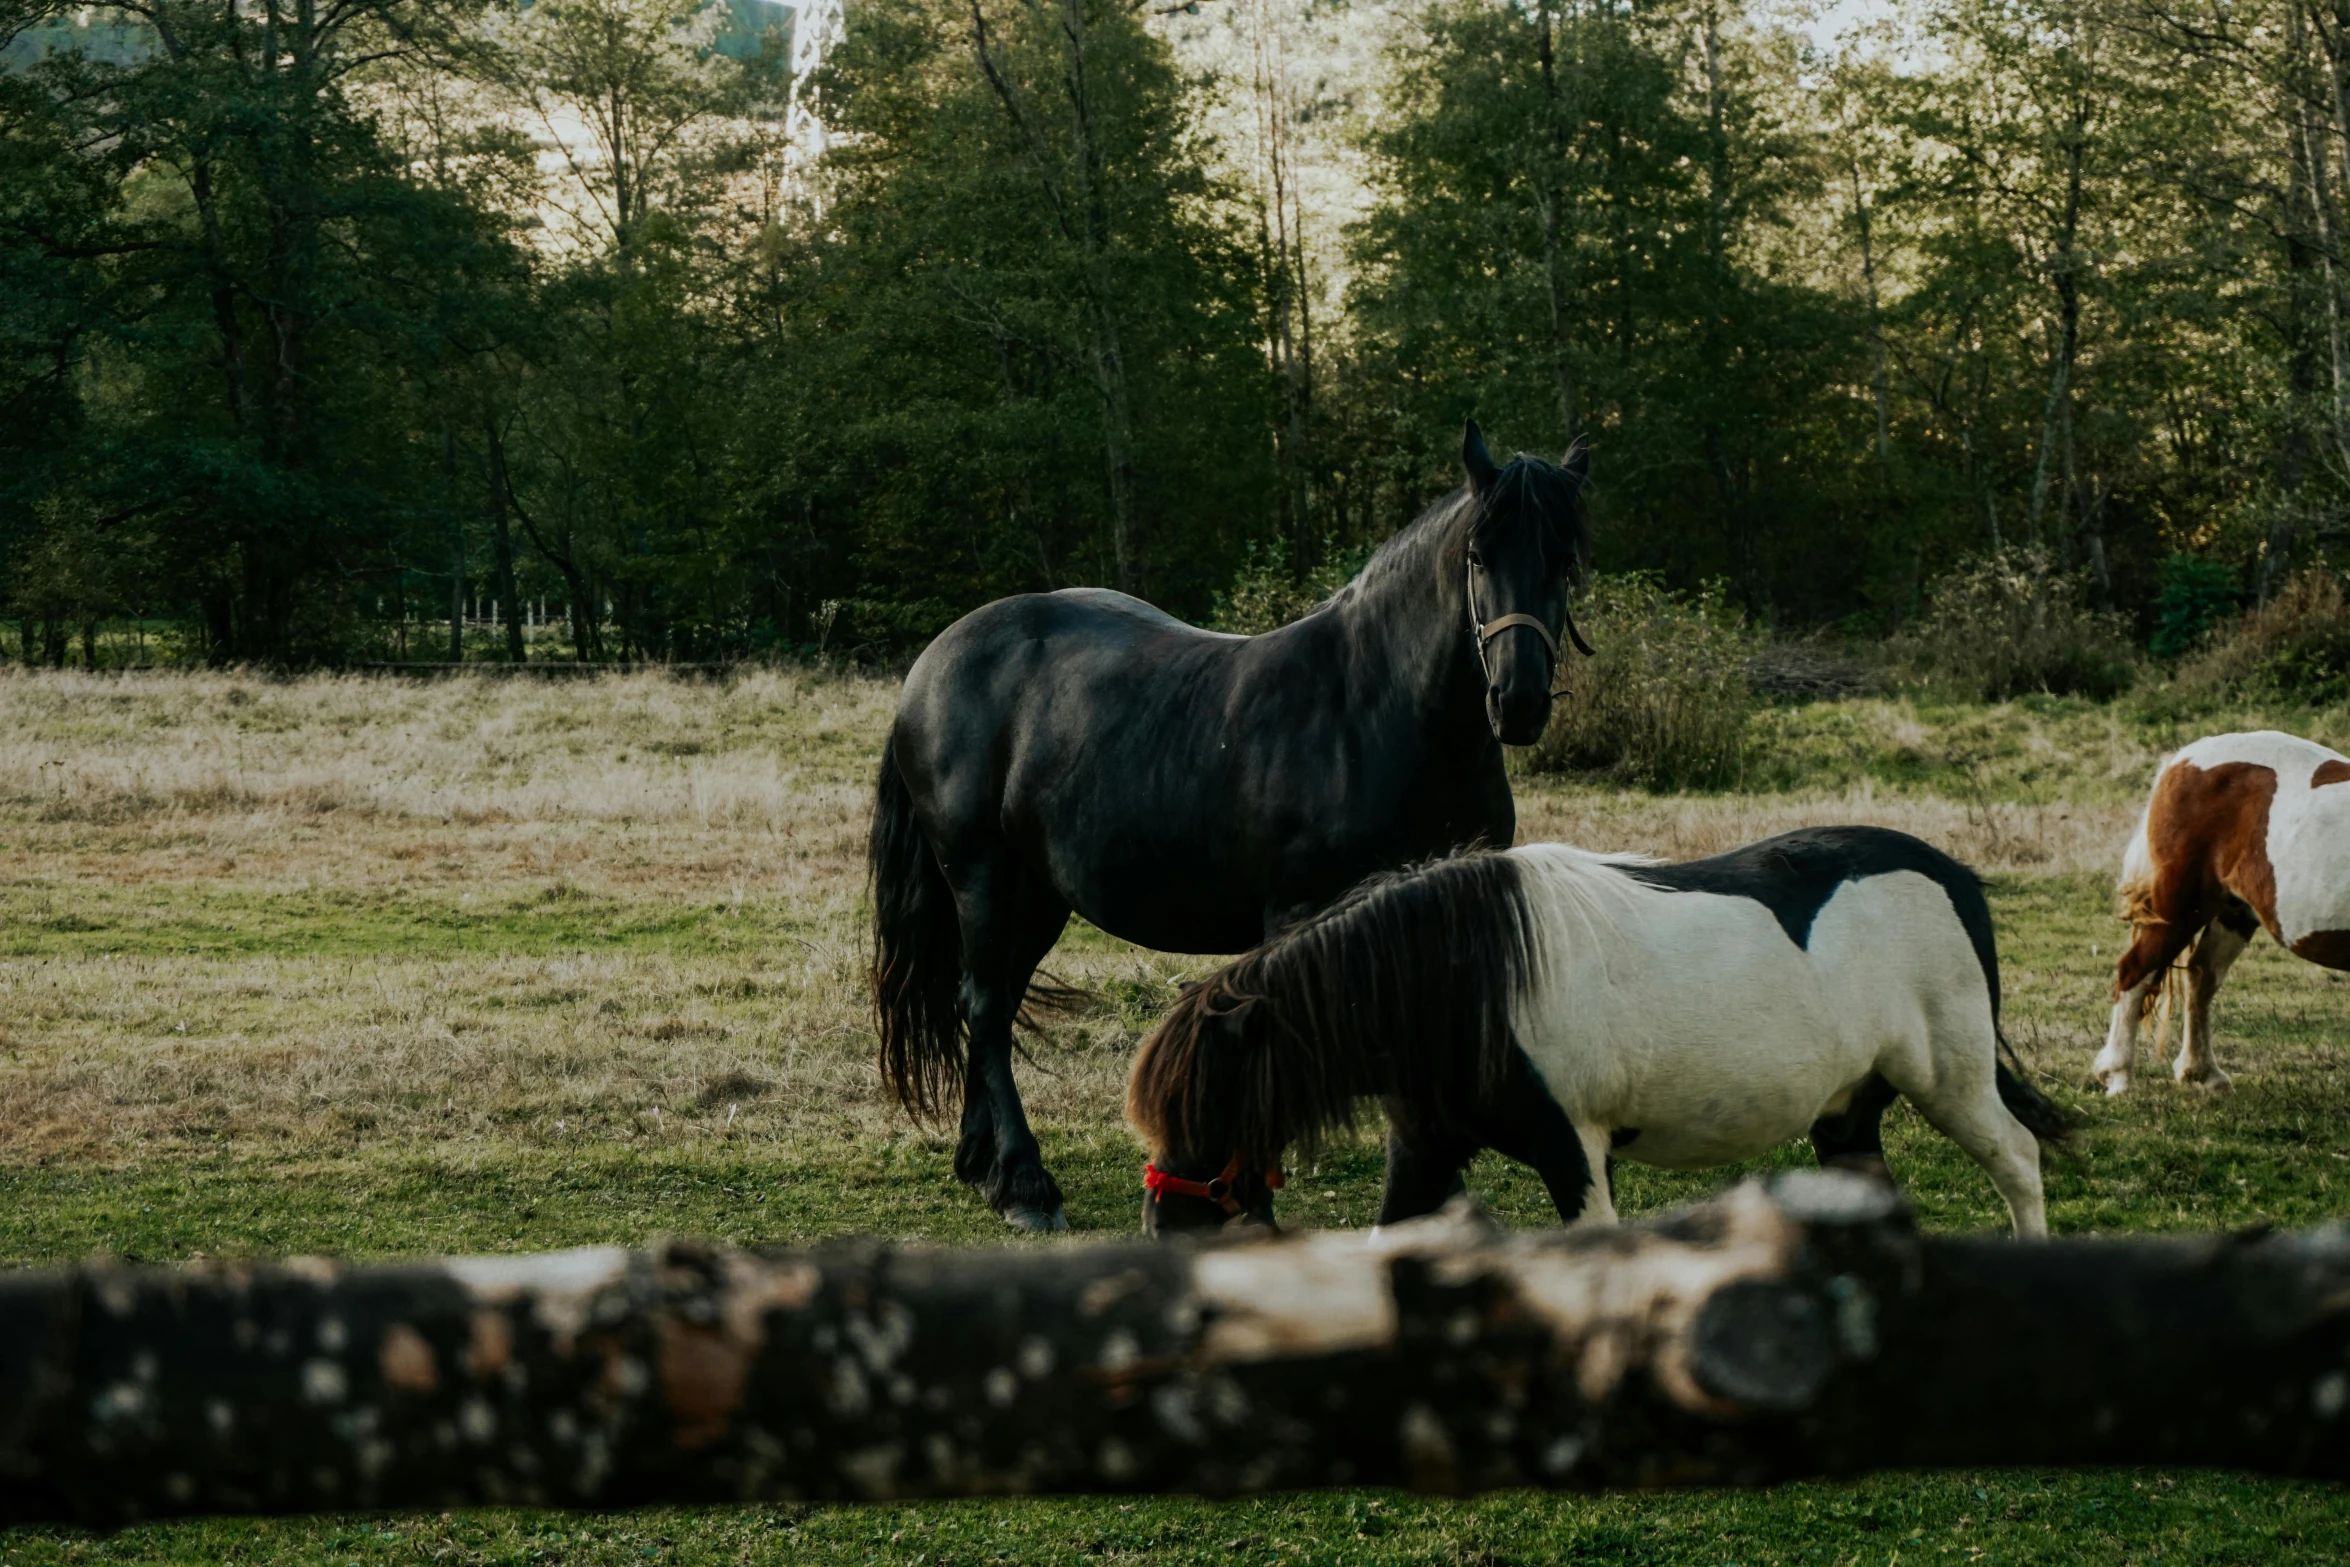 some very cute horses in a big grassy field